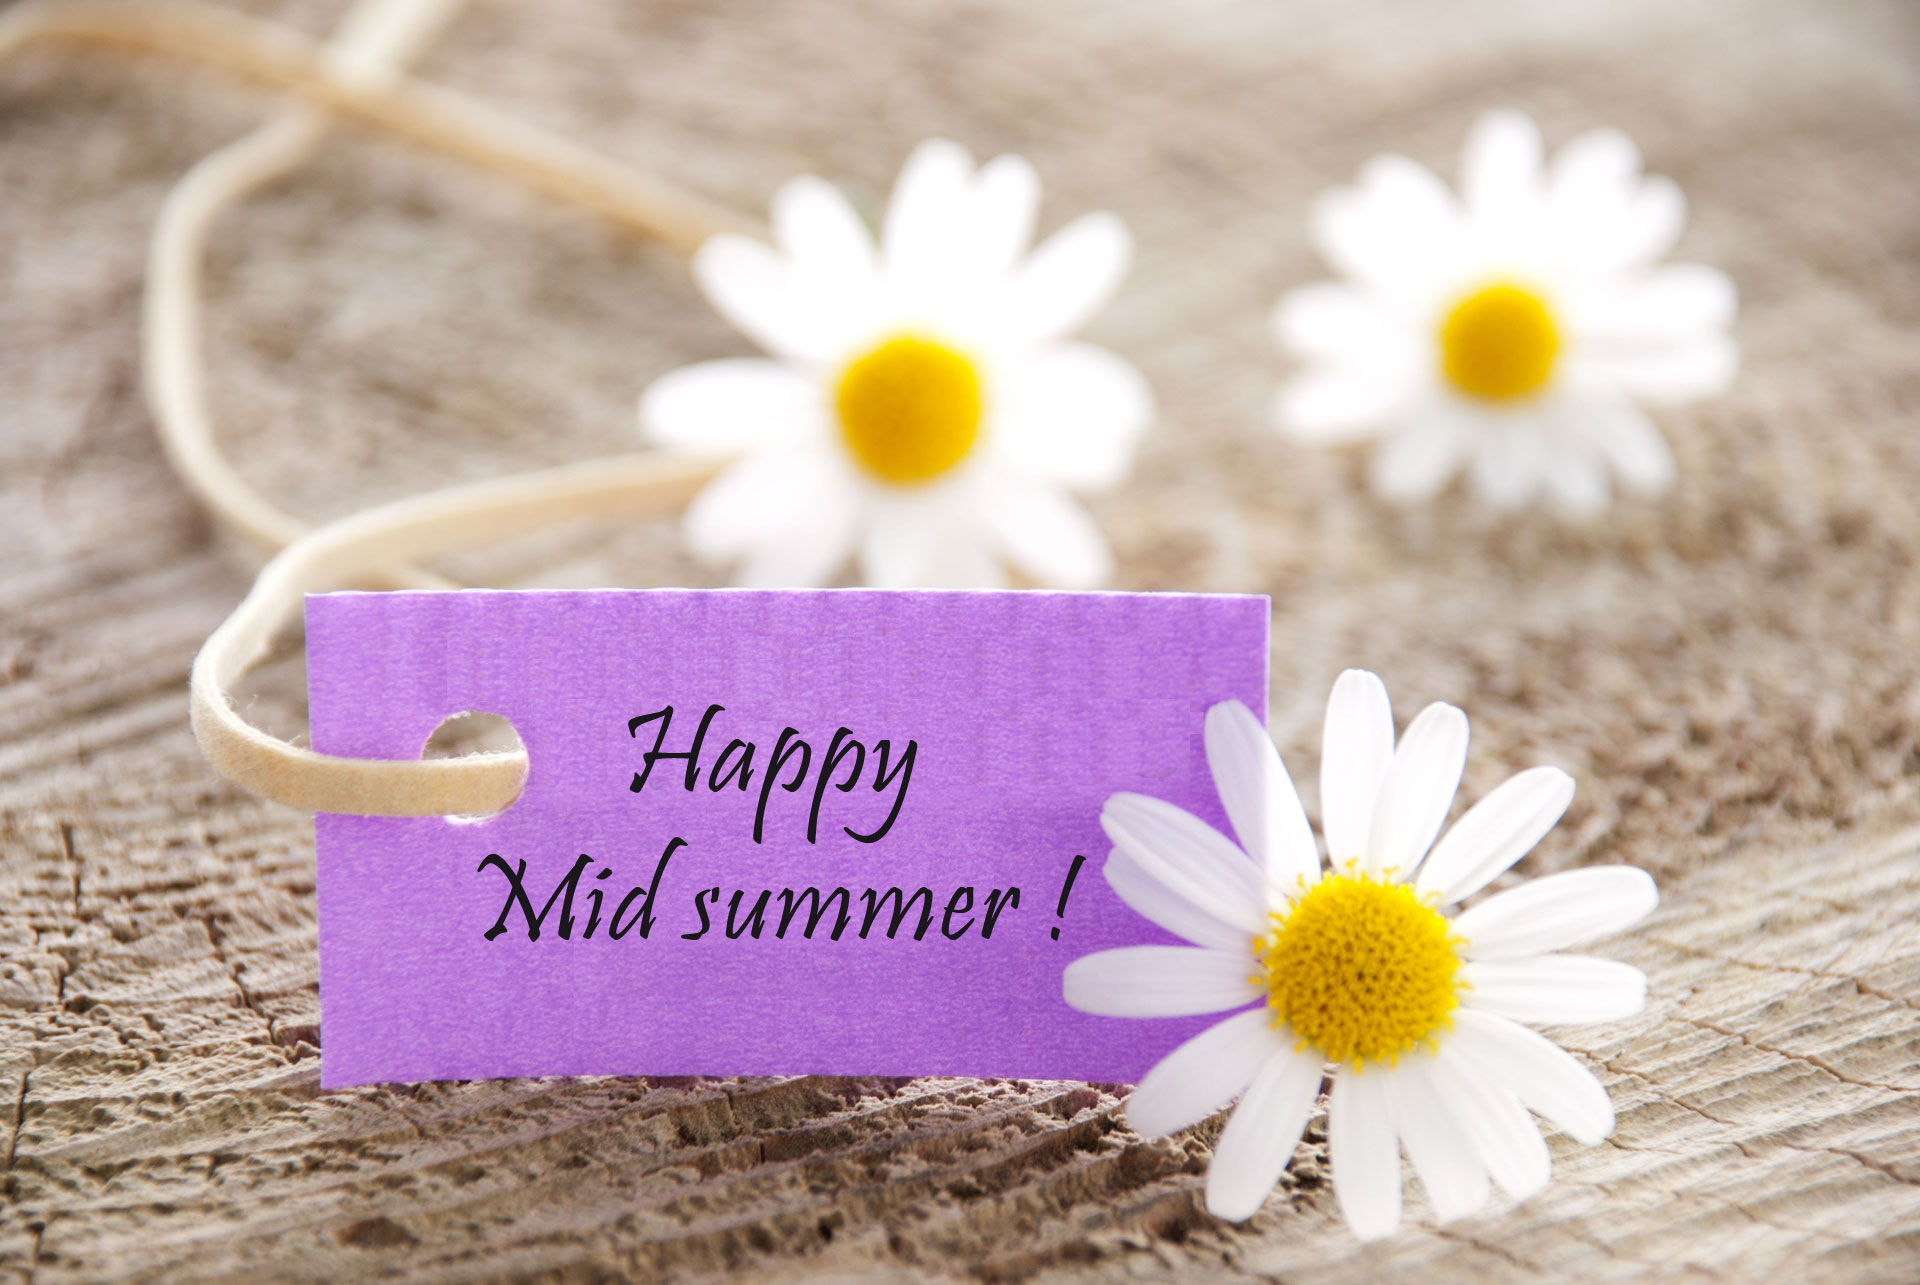 Happy Mid summer !